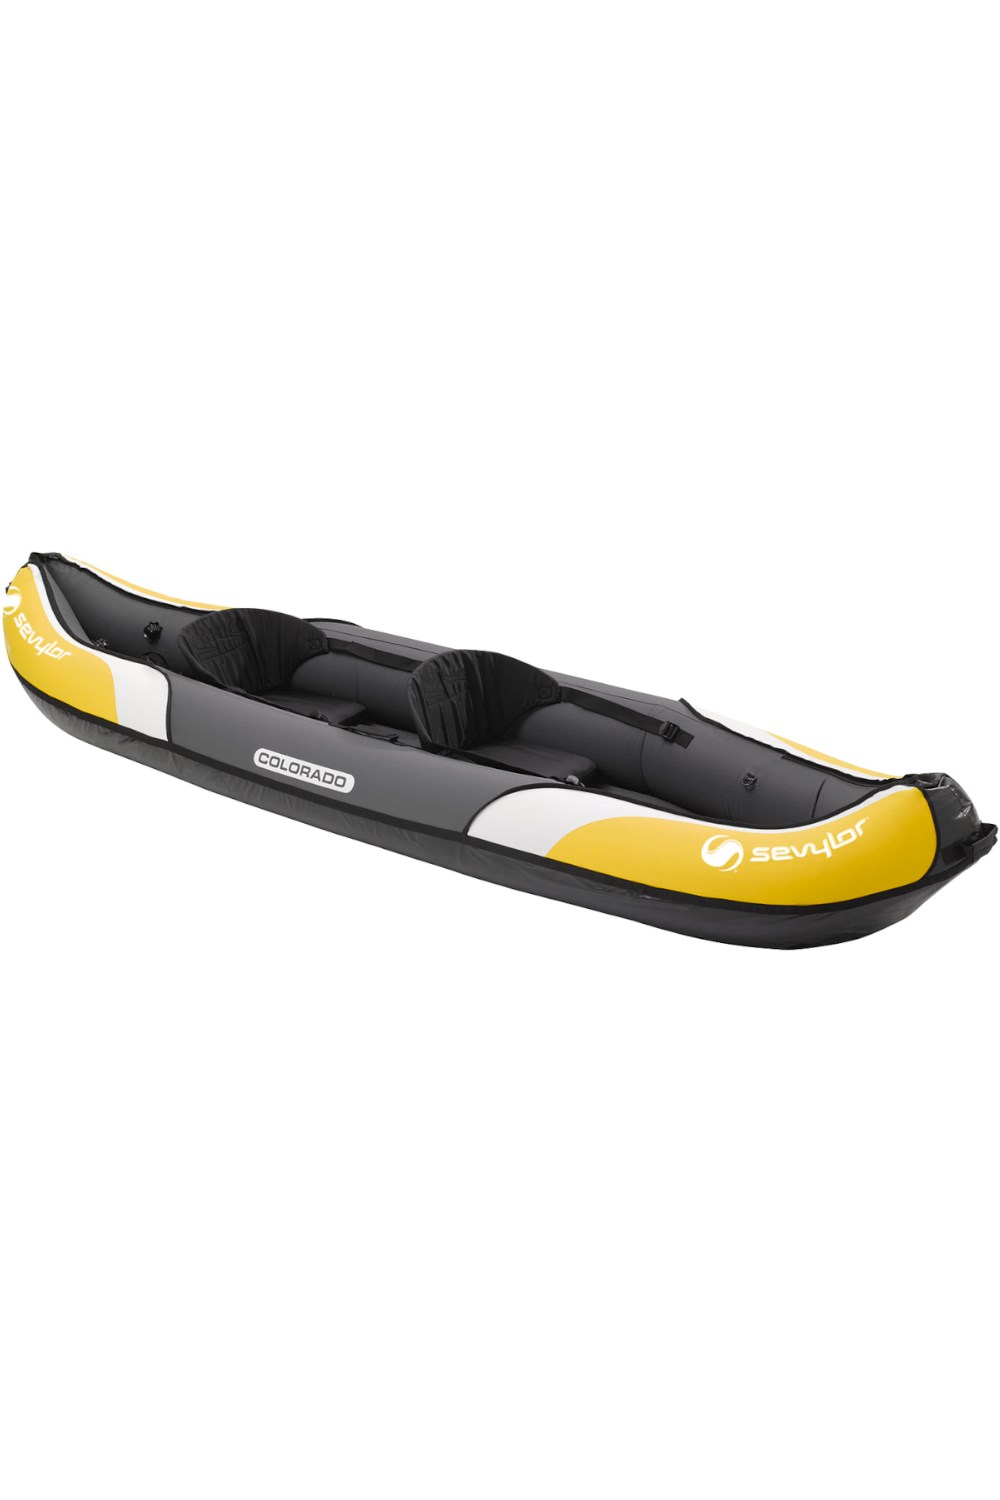 Colorado Inflatable Kayak -